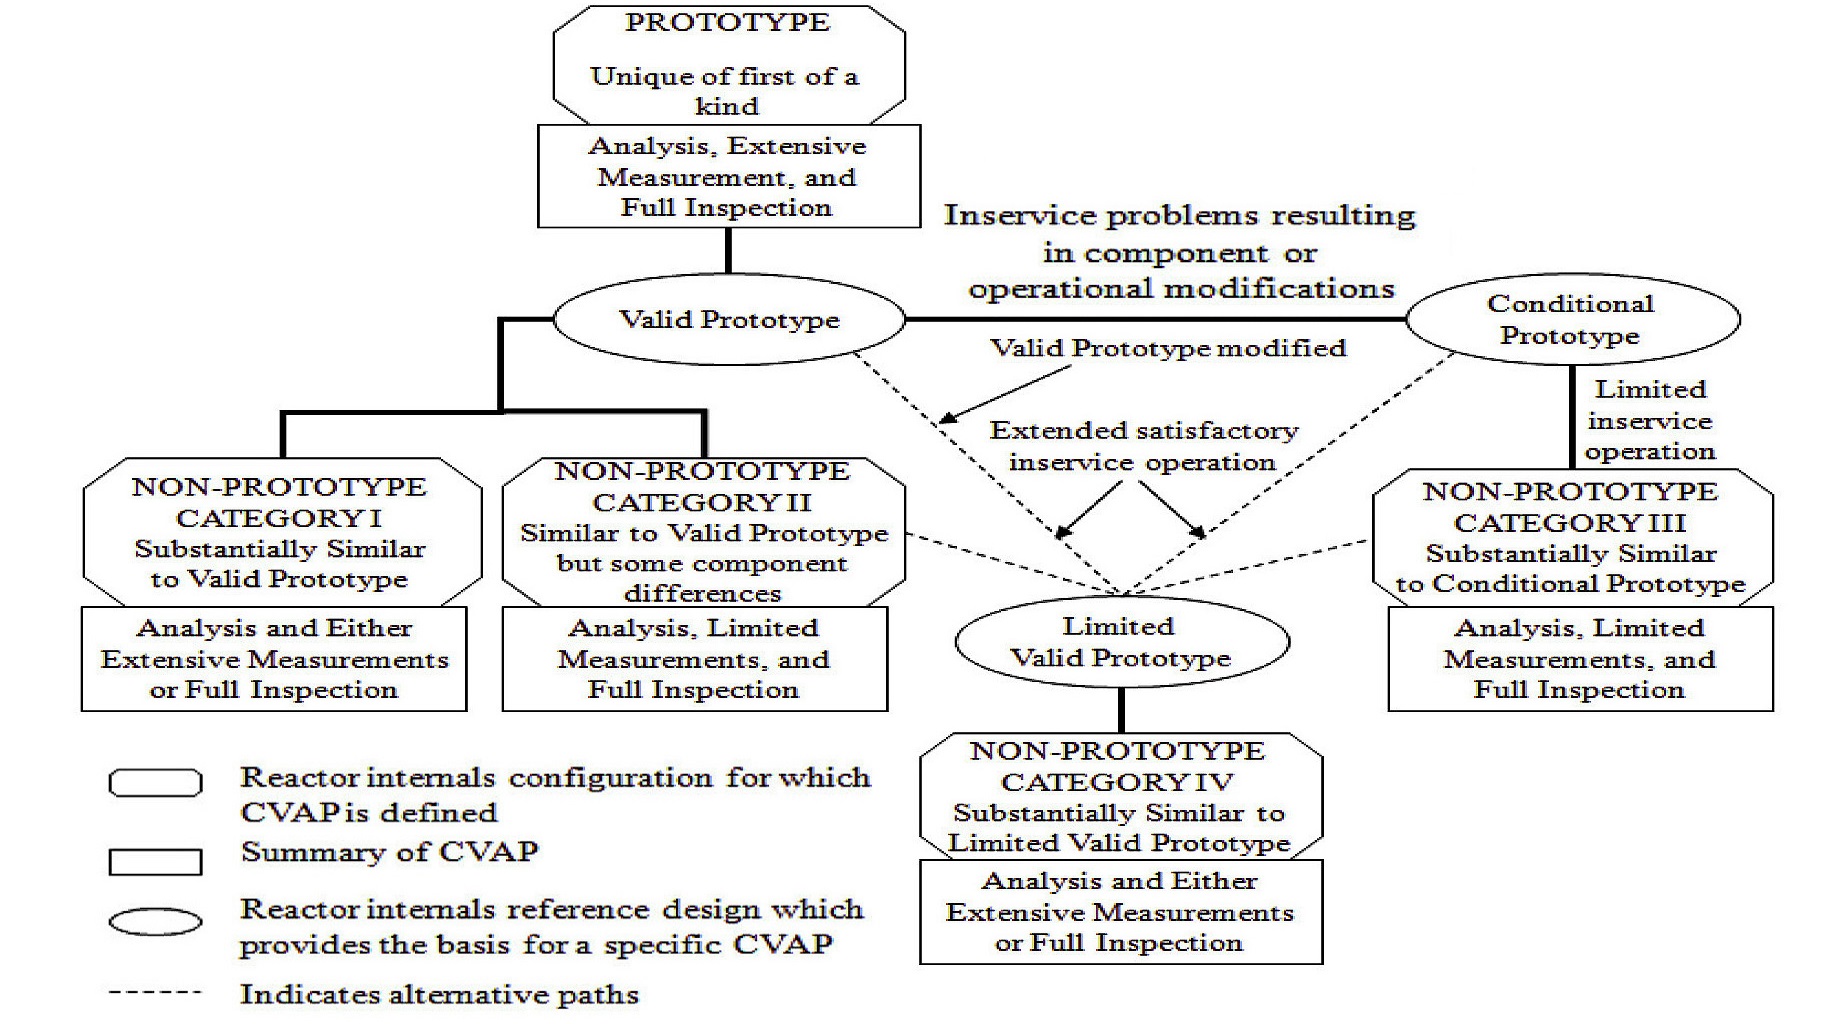 Summary of CVAP